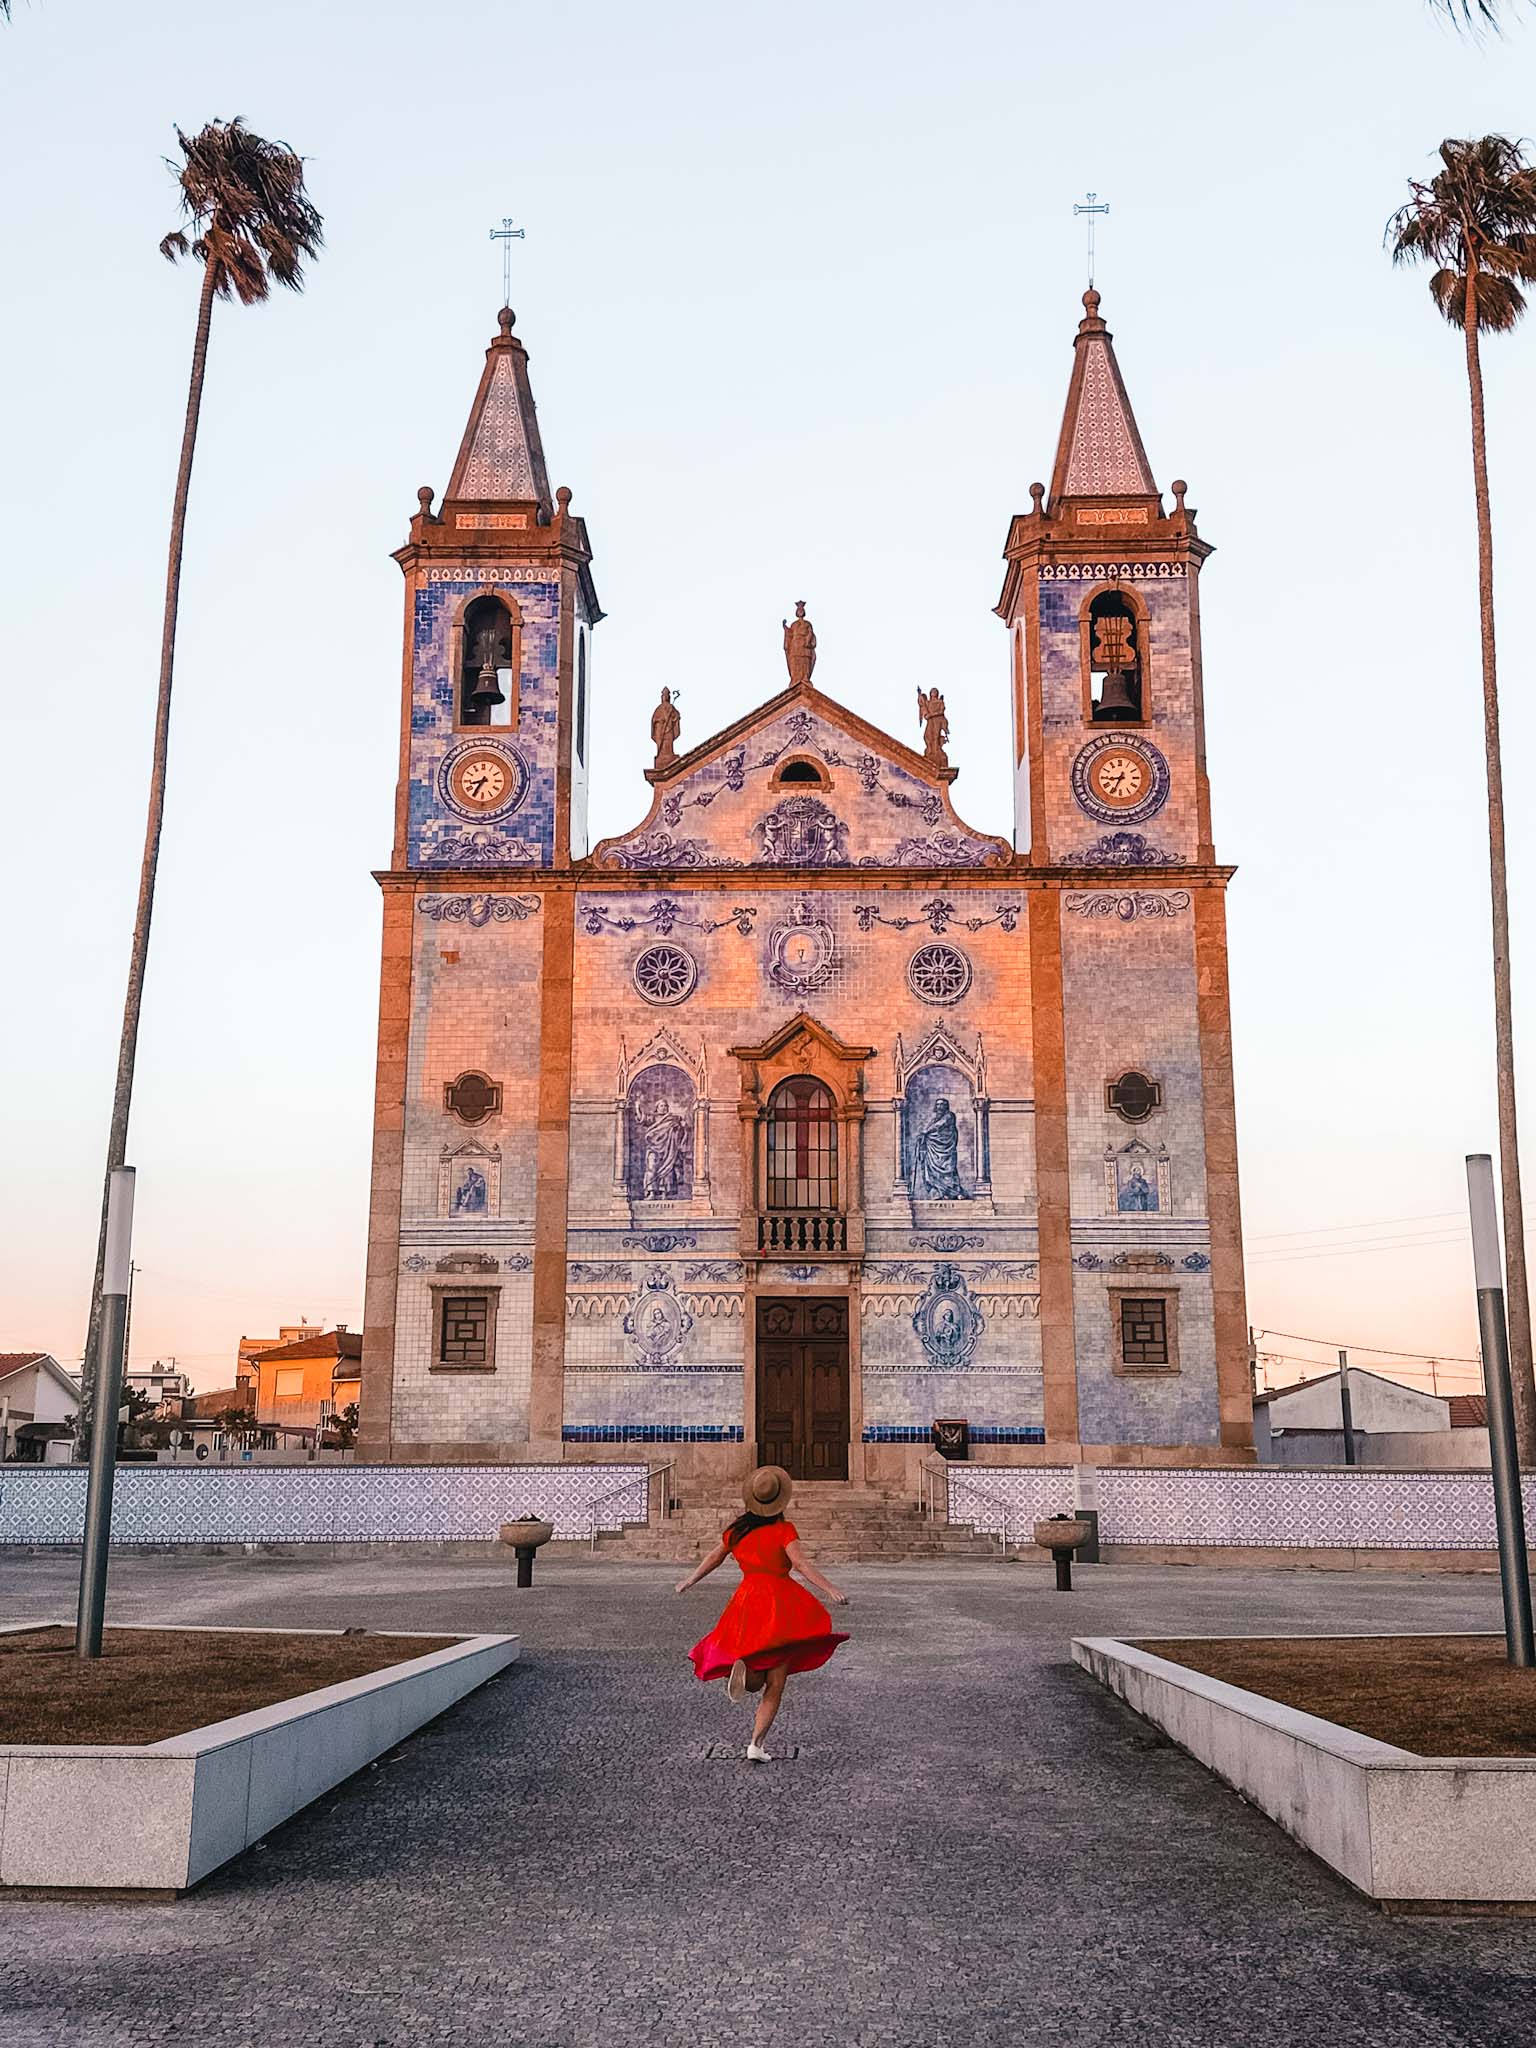 Best Instagram spots in Aveiro, Portugal - Igreja Paroquial de Cortegaça church with tiles